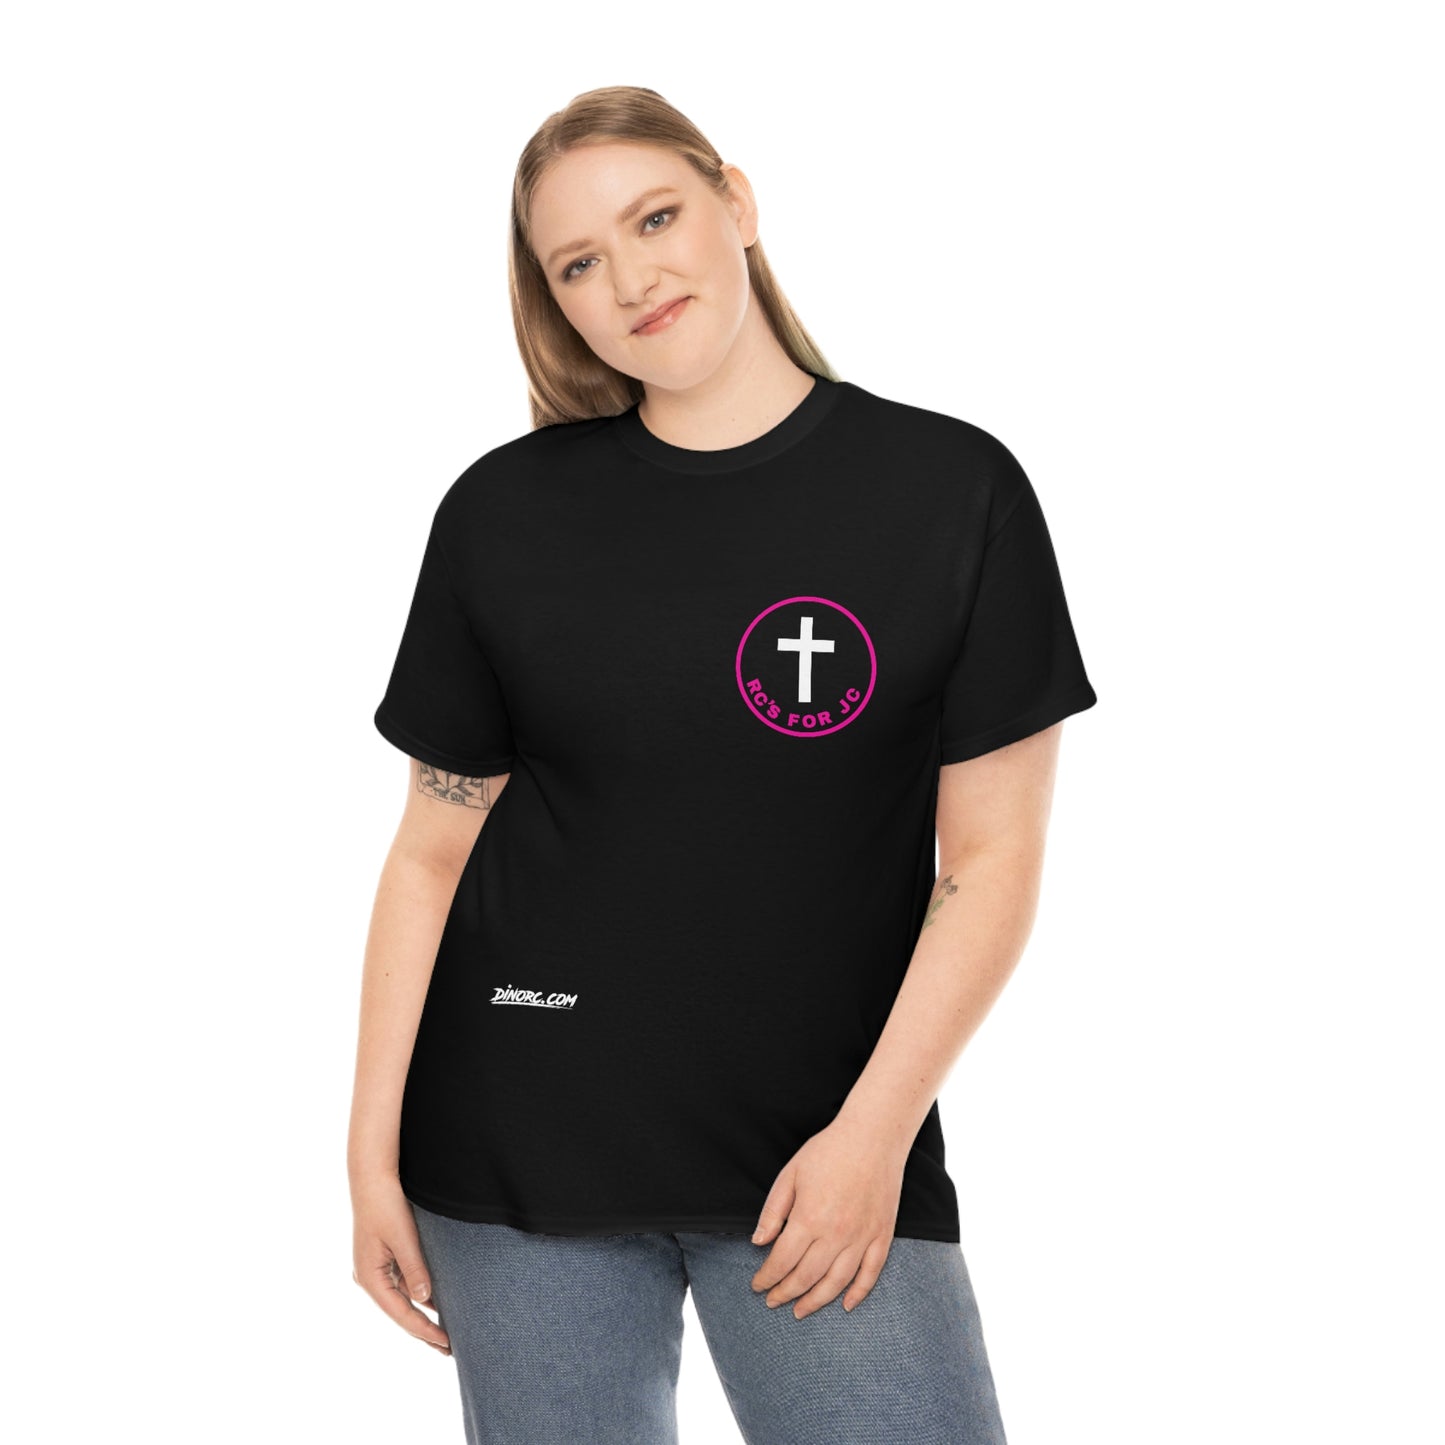 RCSFORJC  Front back Pink white Logo T-Shirt S-5x